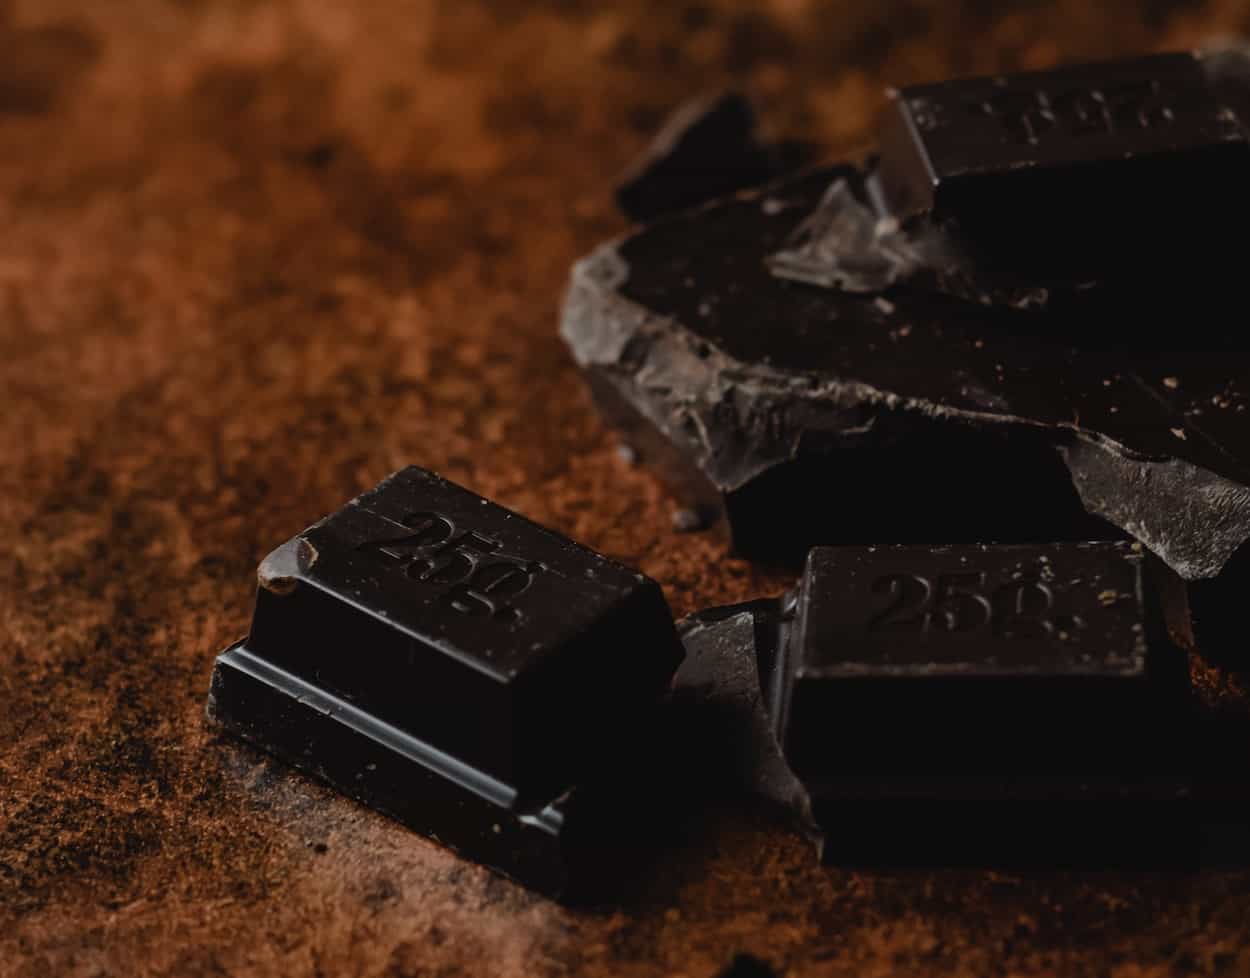 What Is Dark Chocolate?